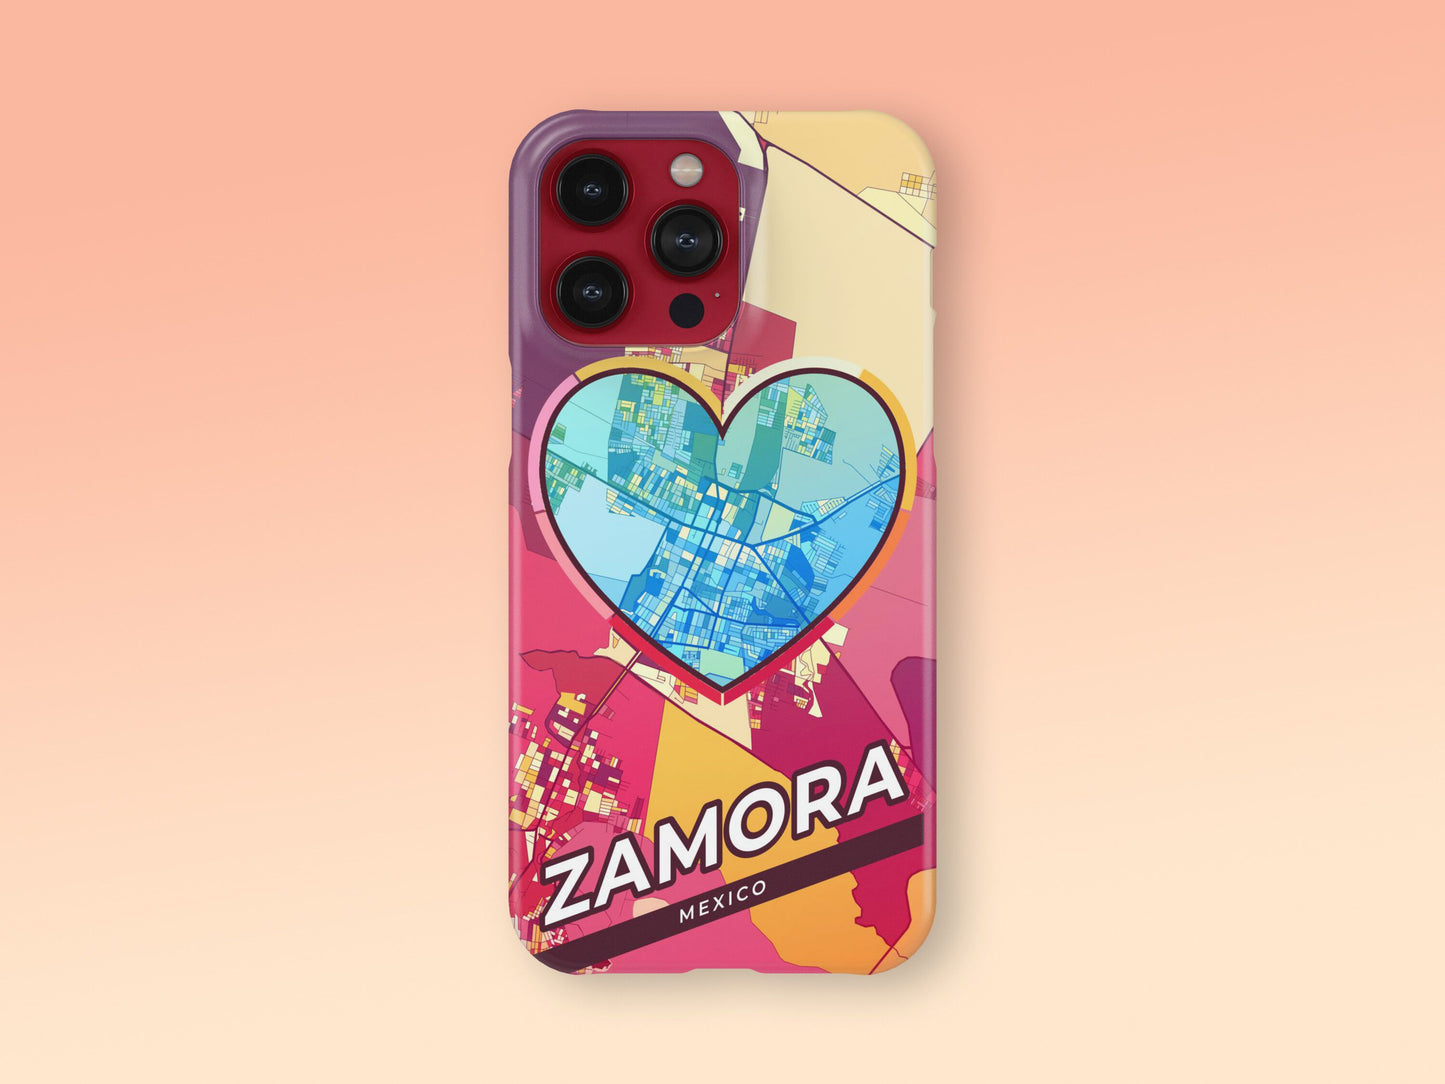 Zamora Mexico slim phone case with colorful icon 2